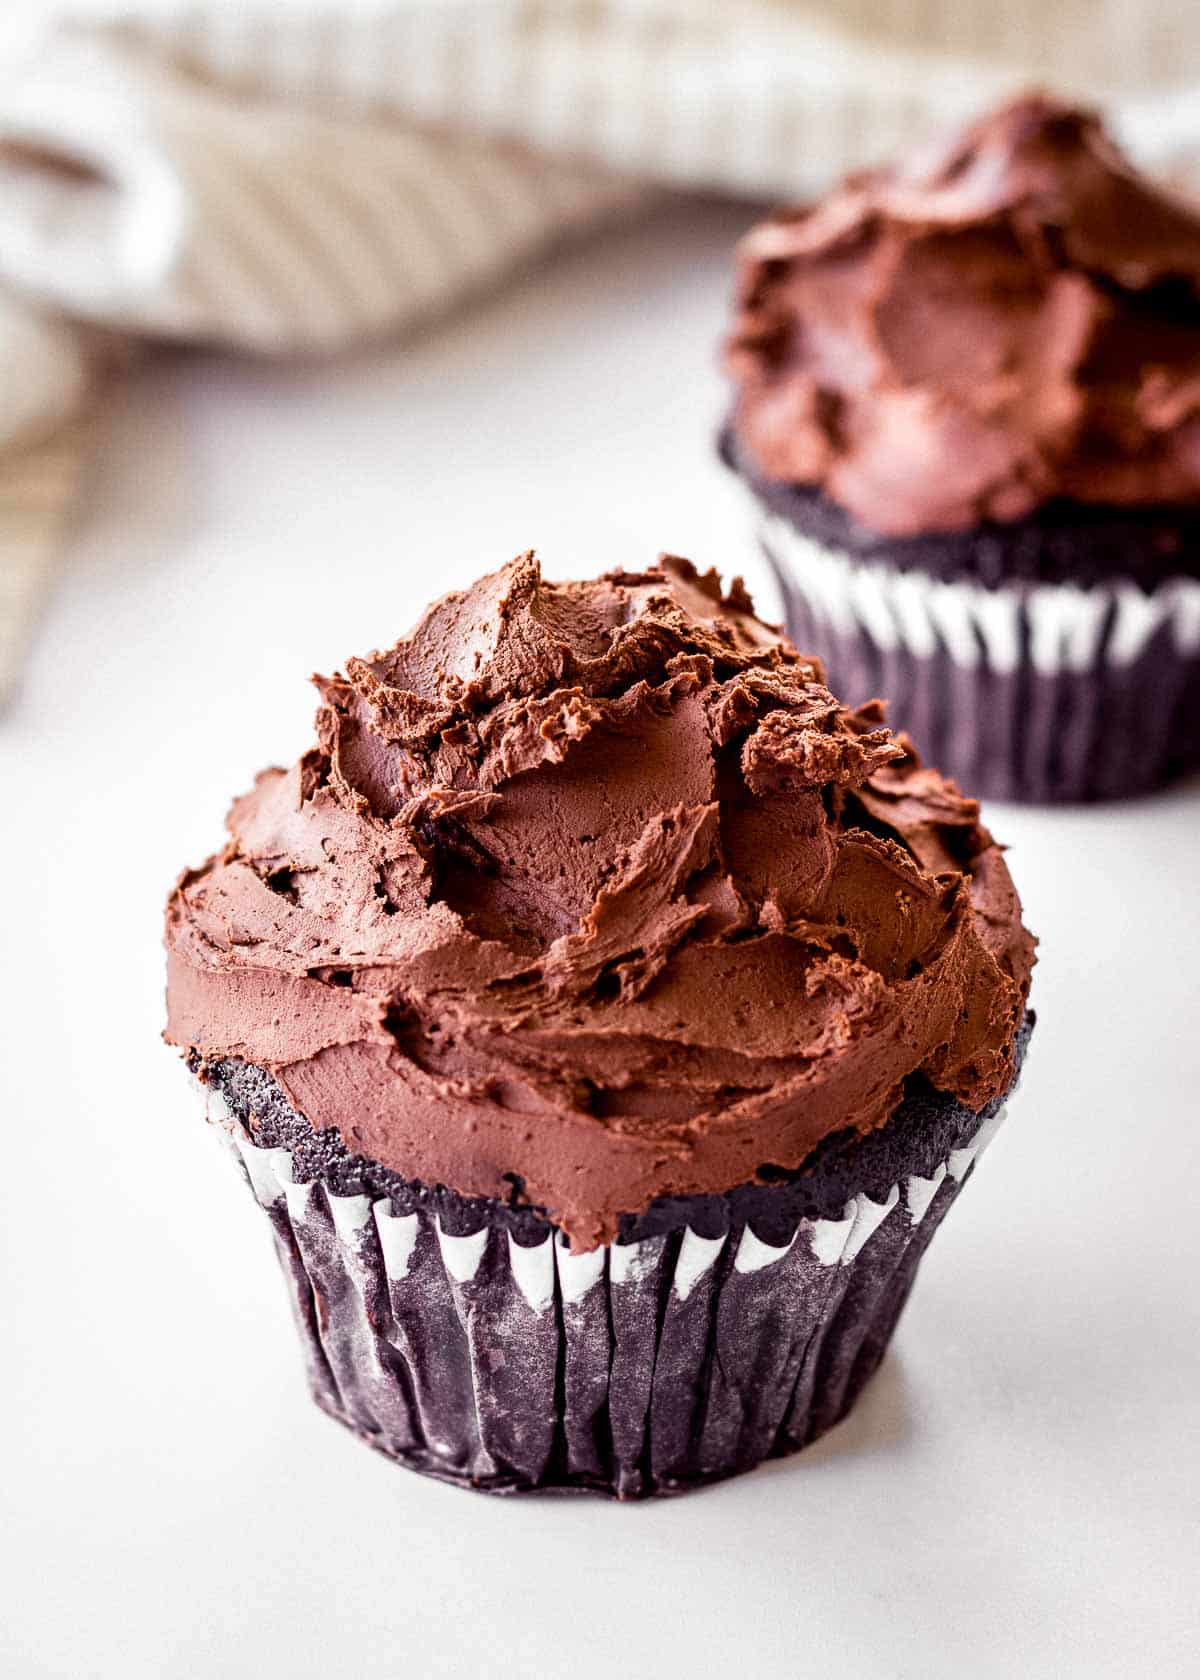 Two chocolate cupcakes decorated with vegan dark chocolate ganache.